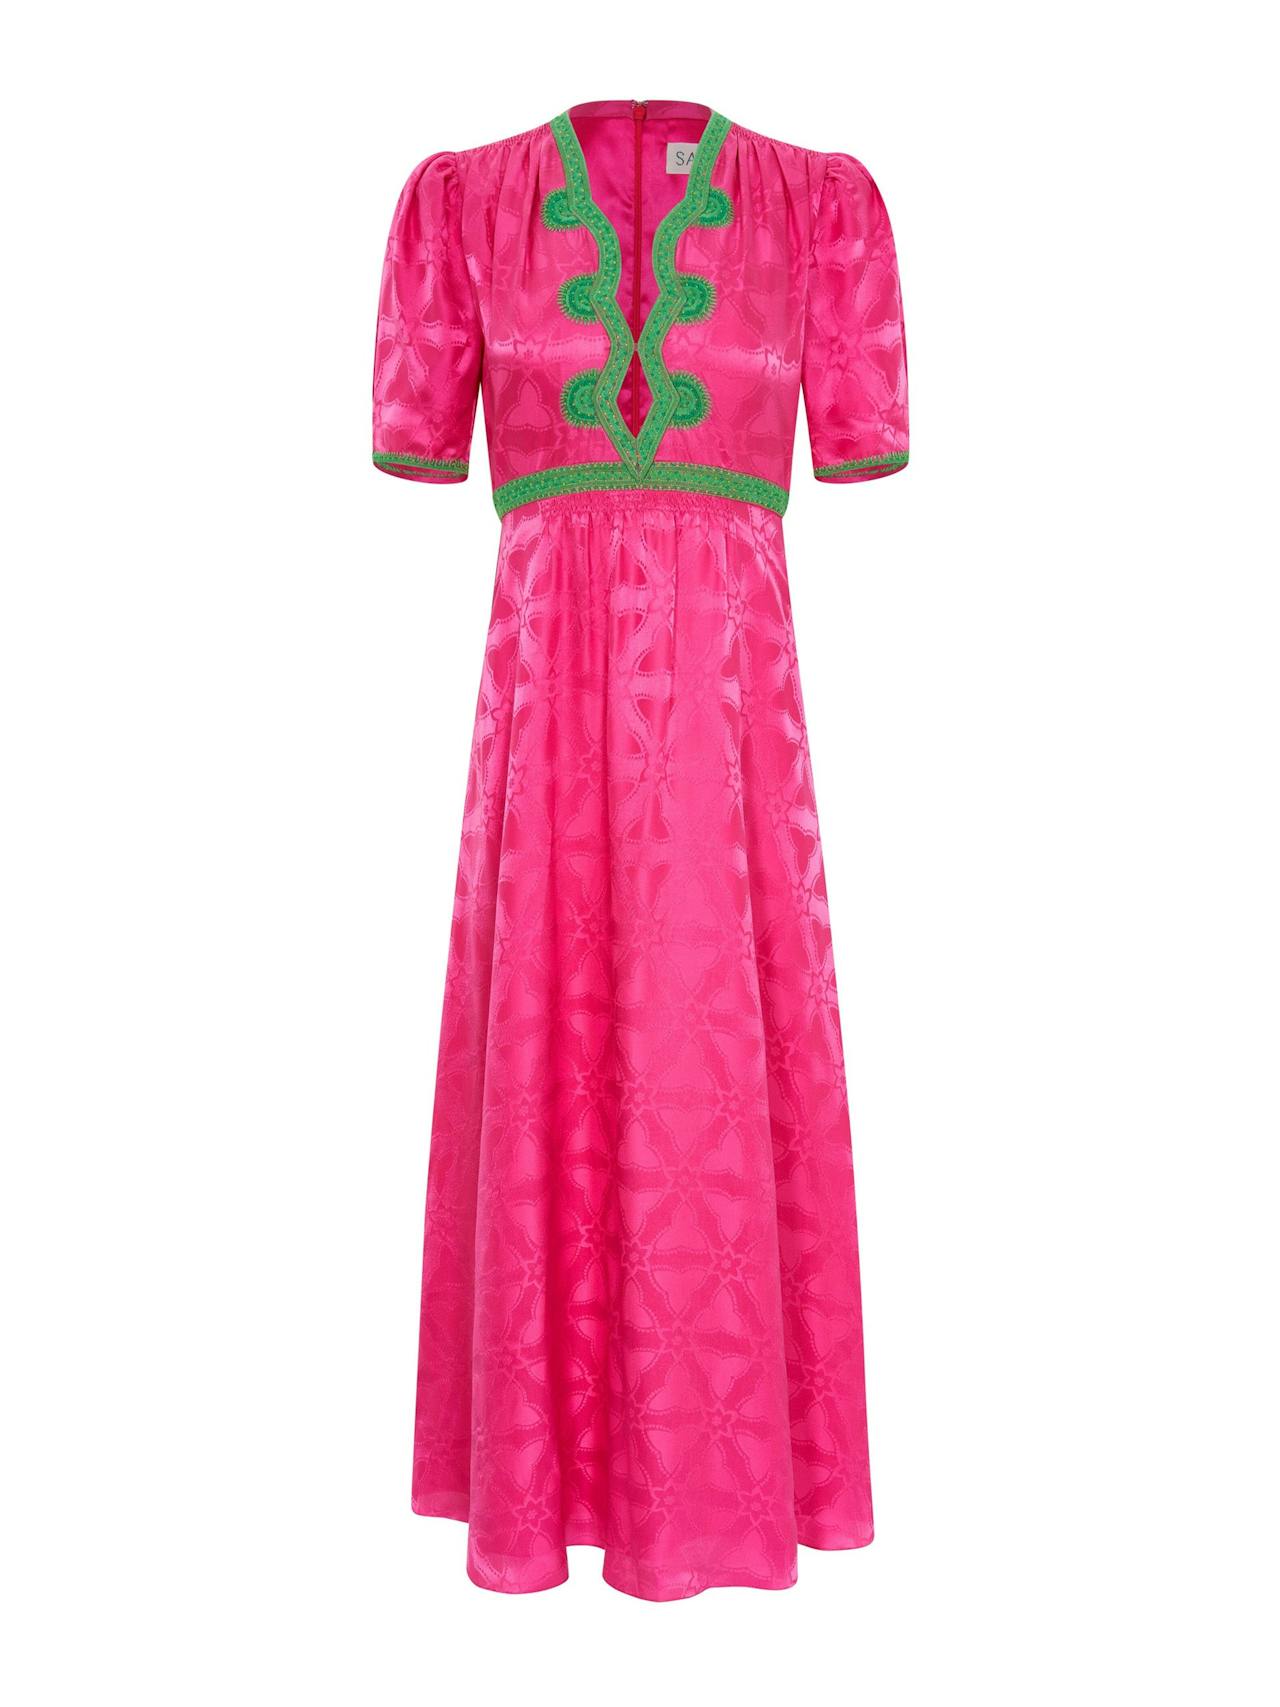 Honeysuckle pink embroidery Tabitha dress